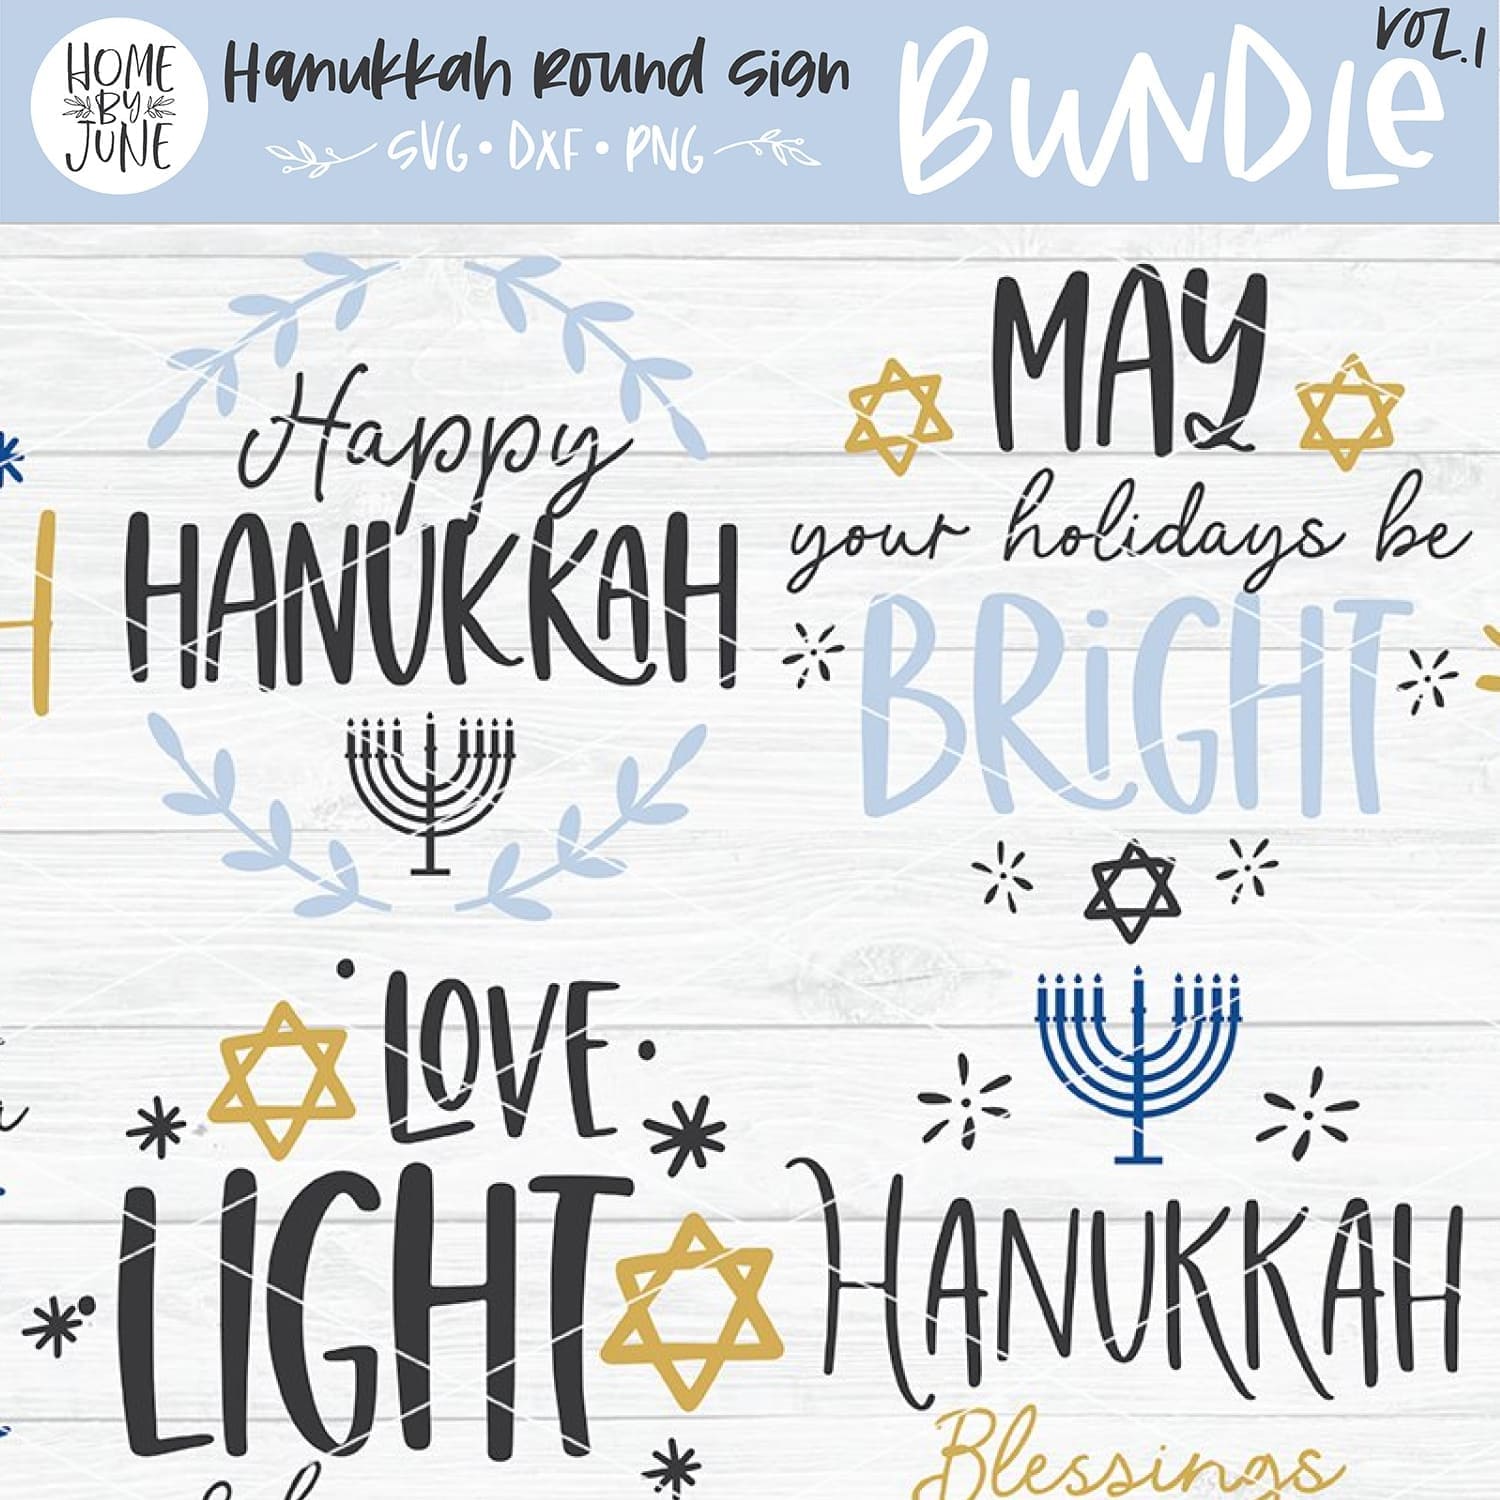 Hanukkah Round/Circle Sign Bundle Vol. 1 SVG DXF PNG.